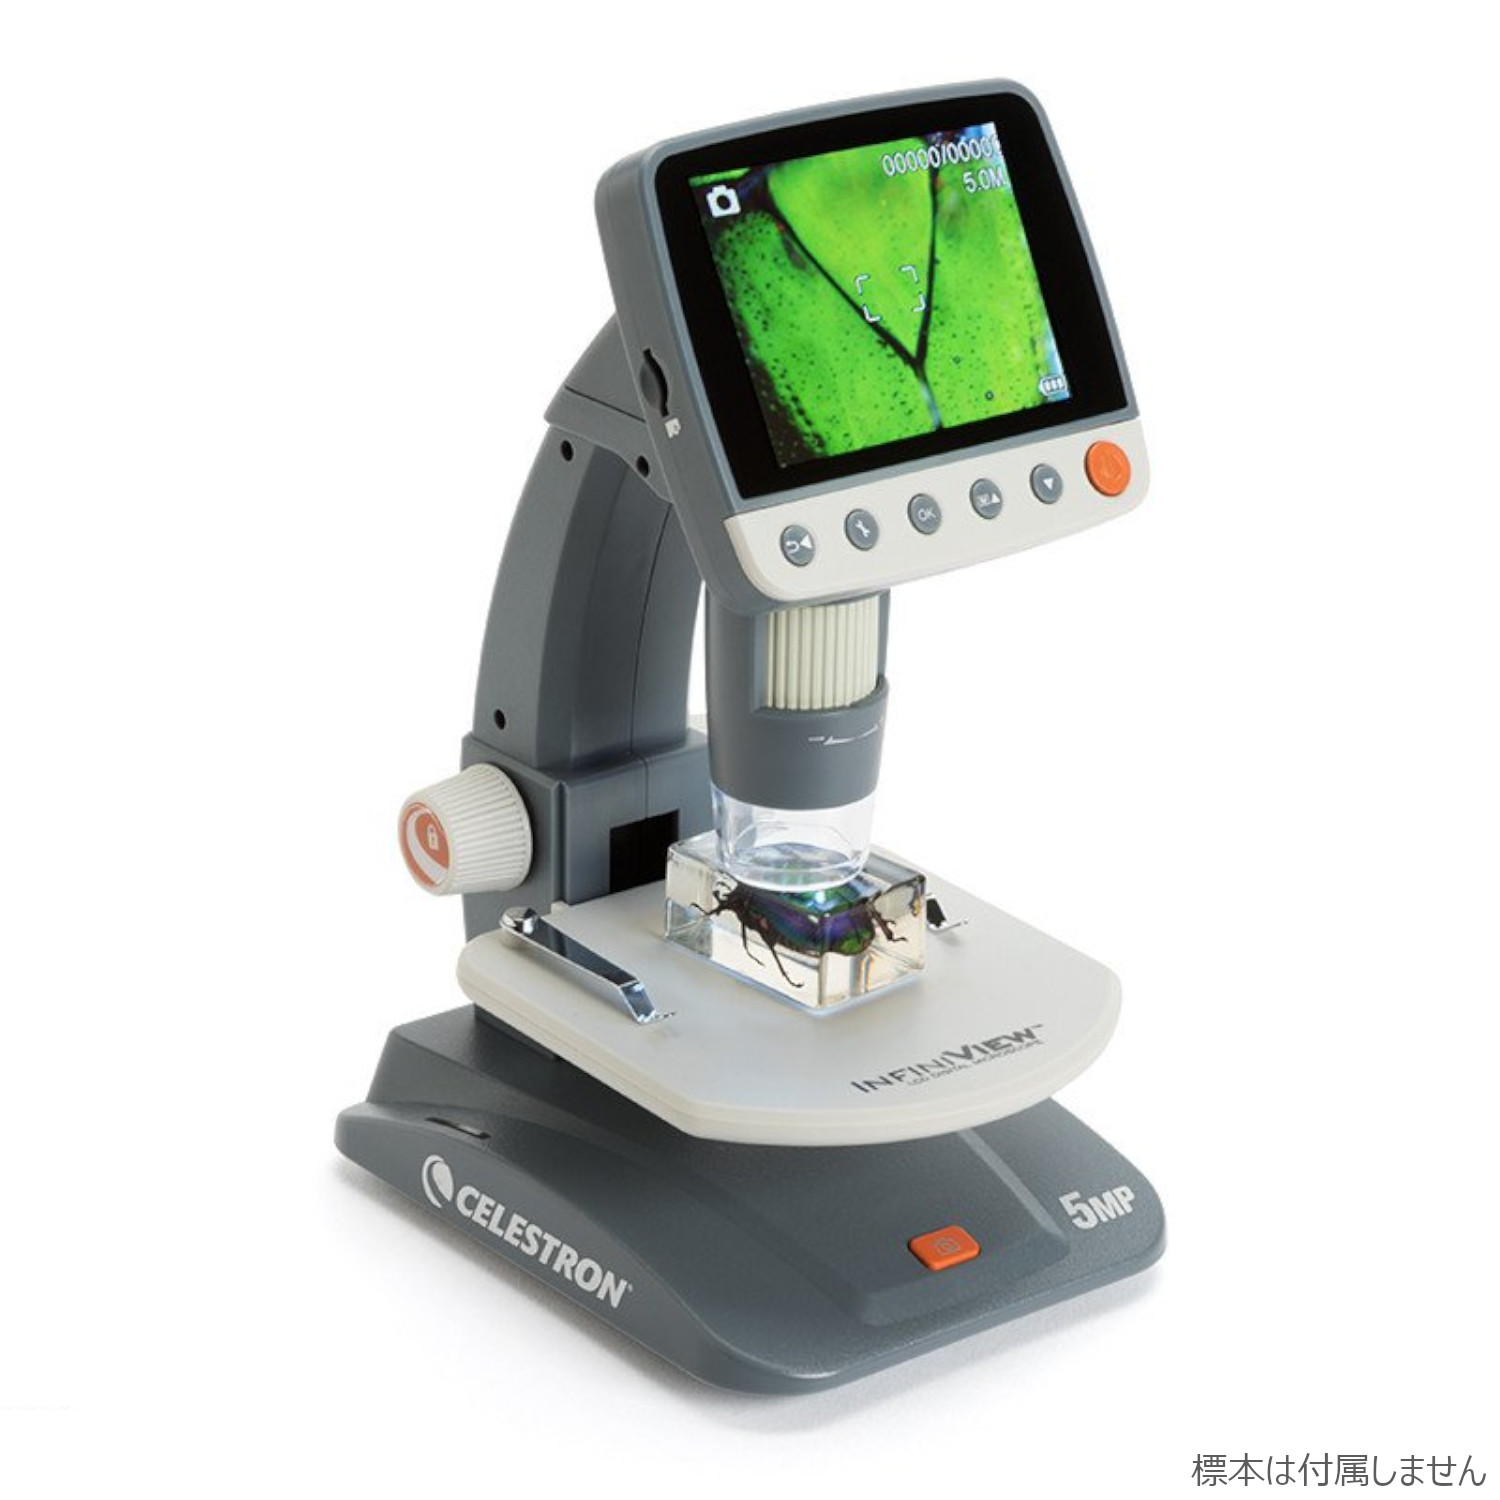 CELESTRON 顕微鏡 InfiniView LCD デジタル顕微鏡 —